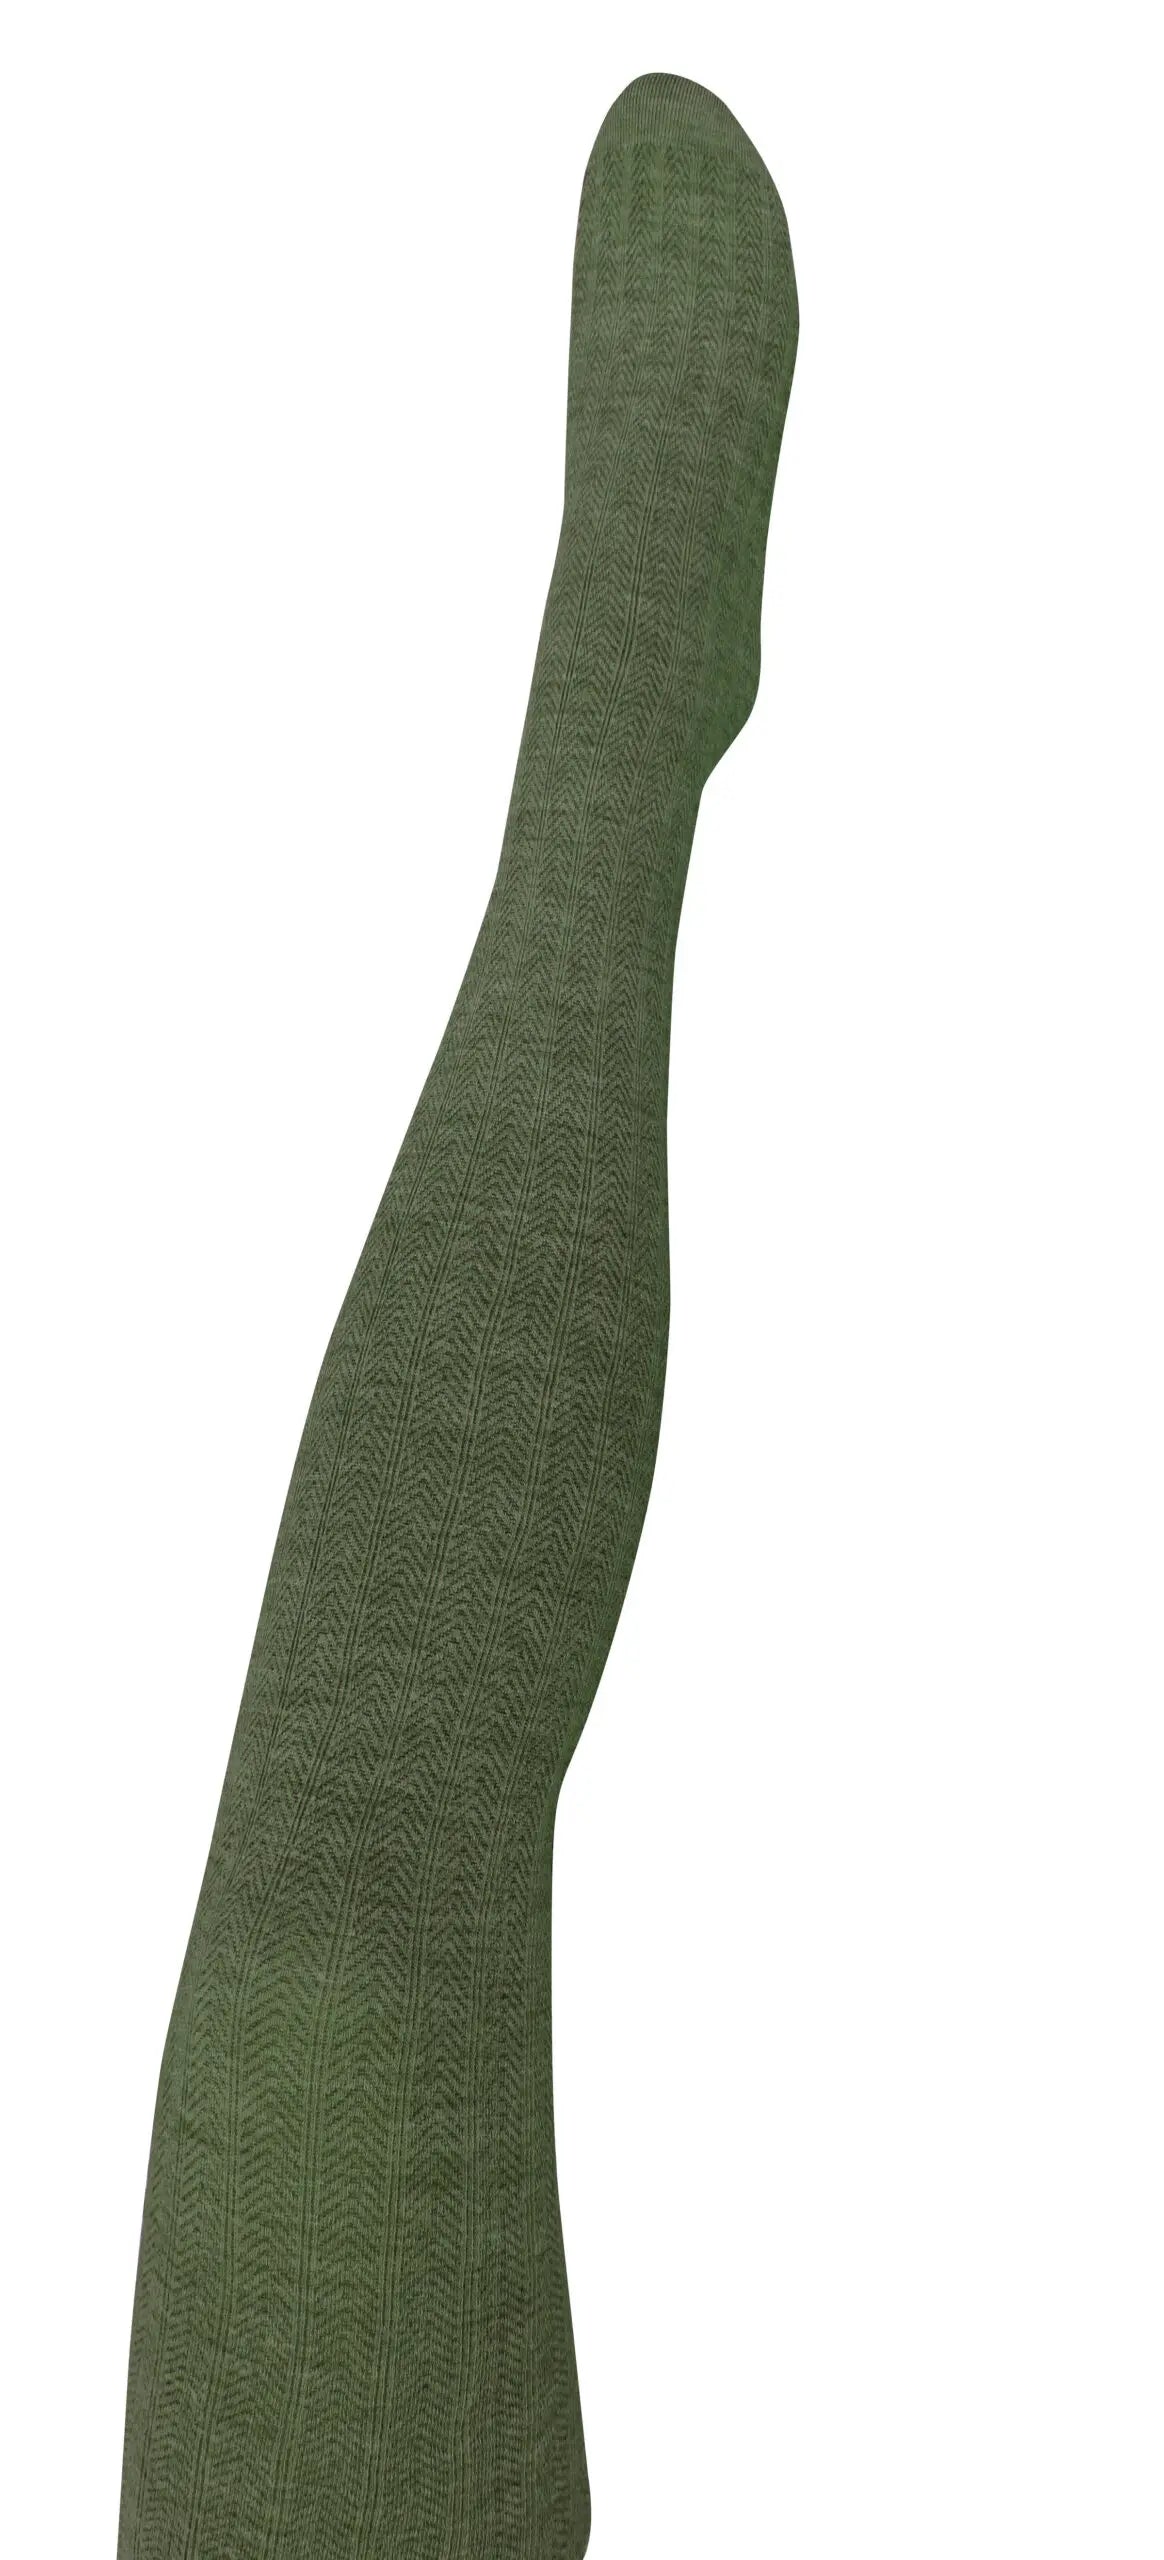 Tightology ‘Martini Green’ Wool Tights